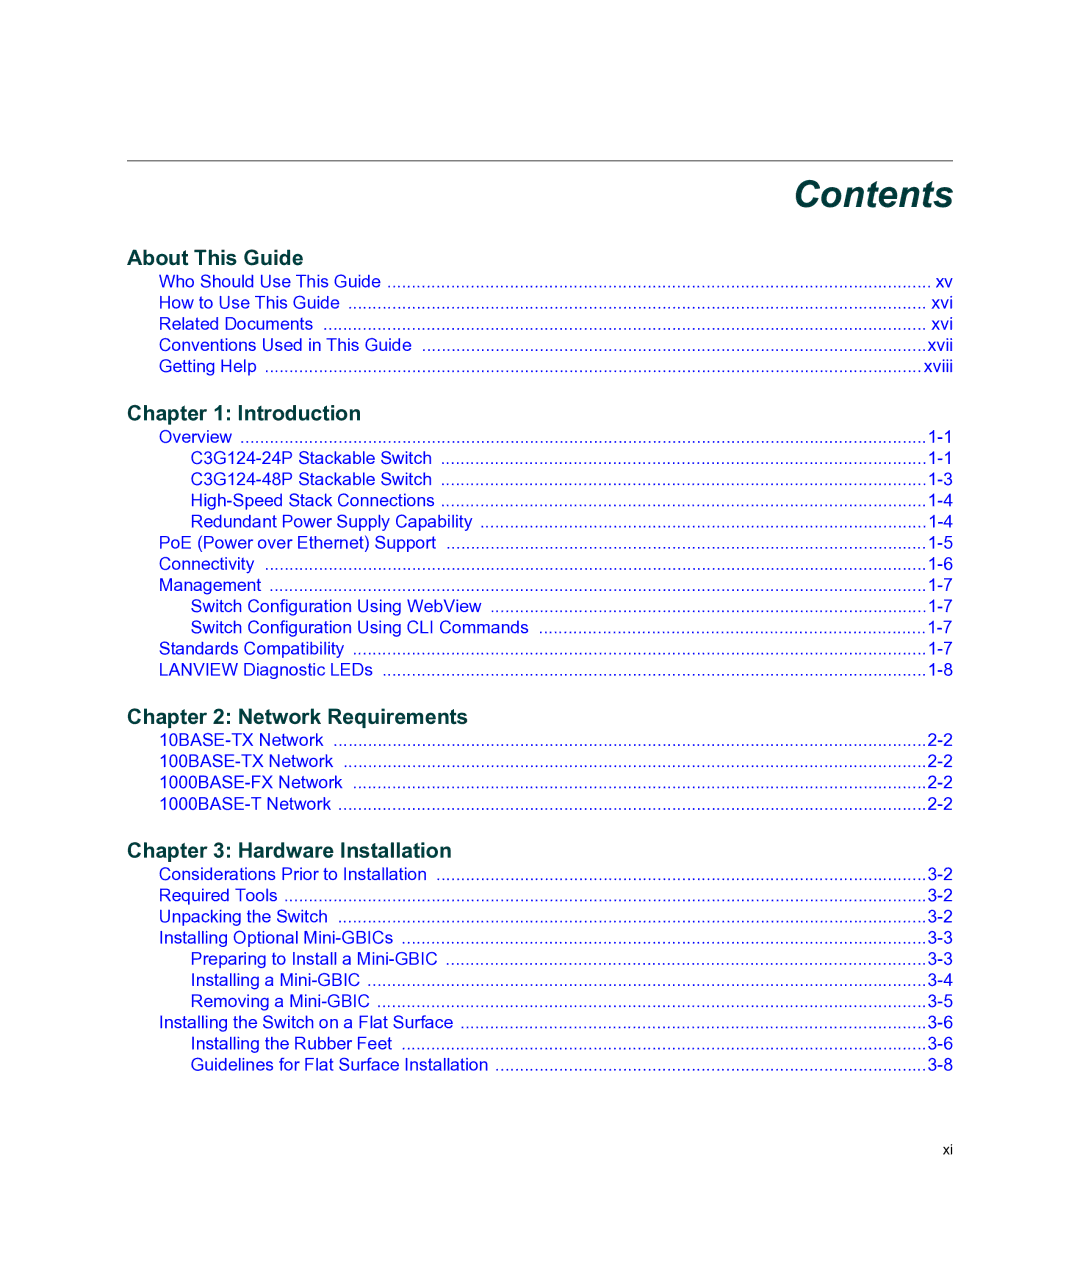 Enterasys Networks C3G124-24P, C3G124-48P manual Contents 